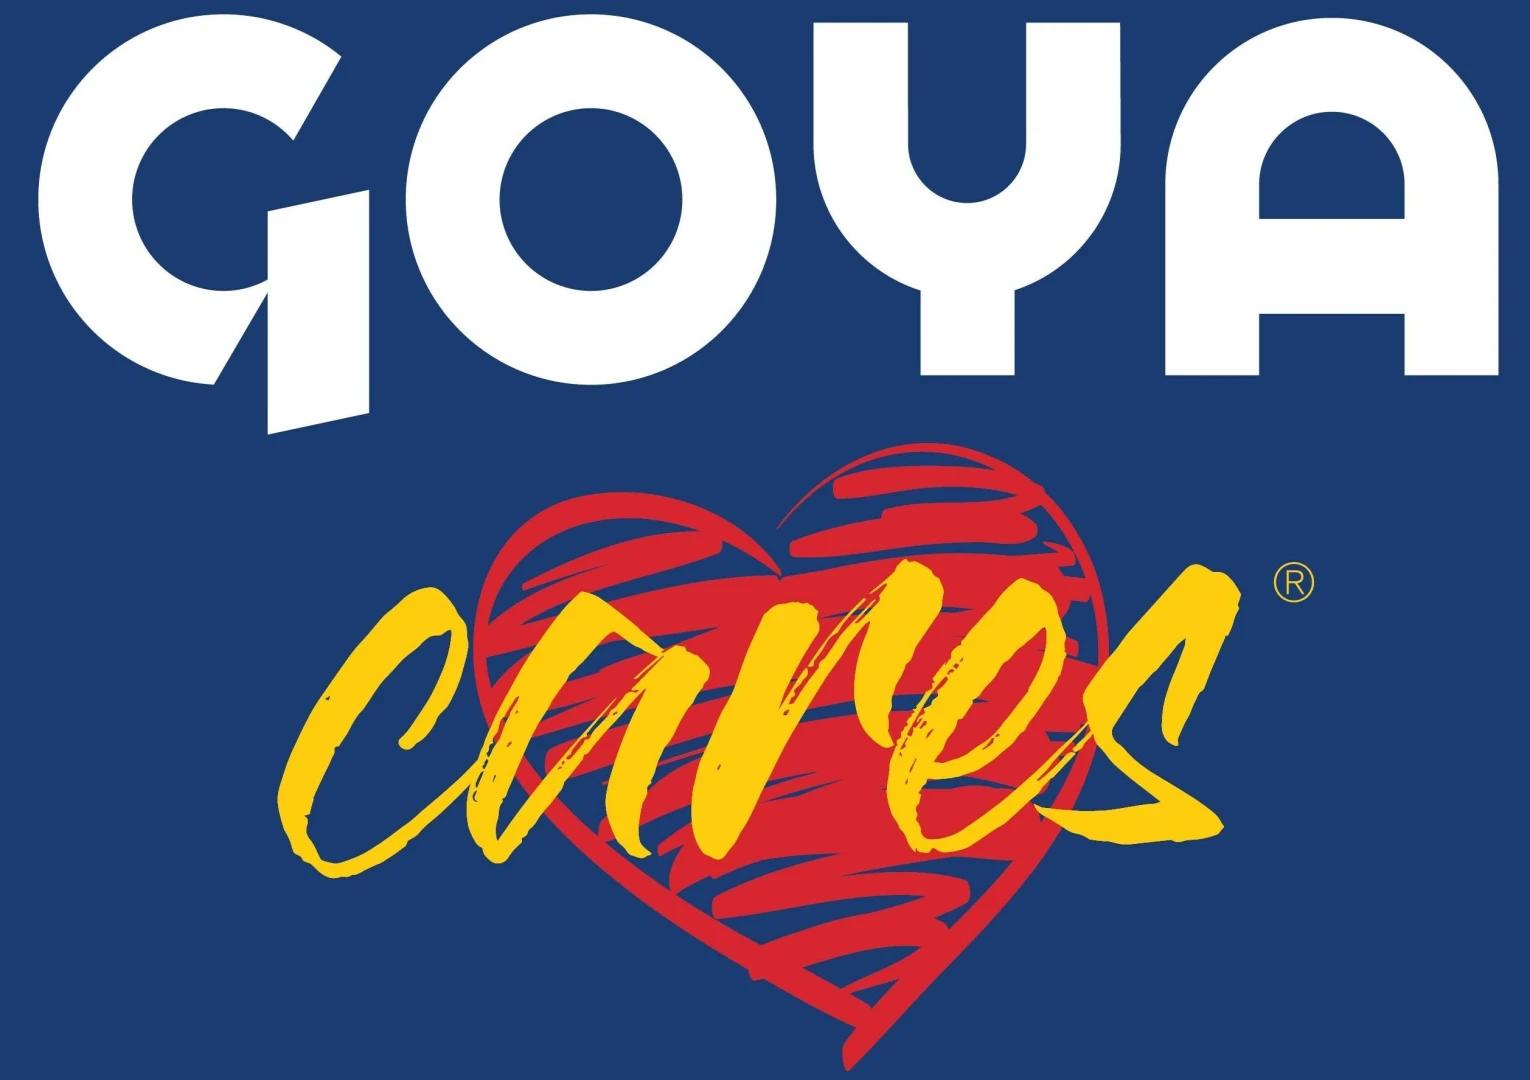 Goya Cares combats child trafficking through Sound of Freedom film